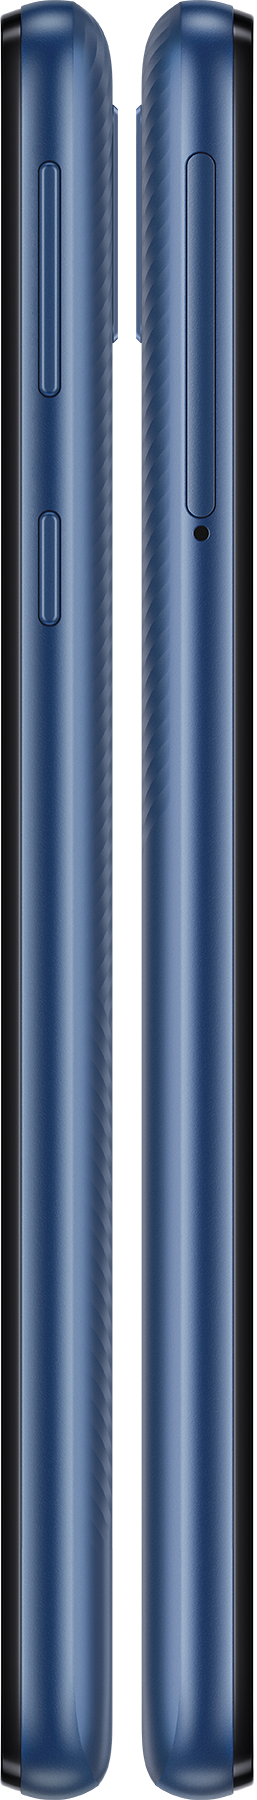 Samsung Galaxy A01 Core SM-A013F 16GB